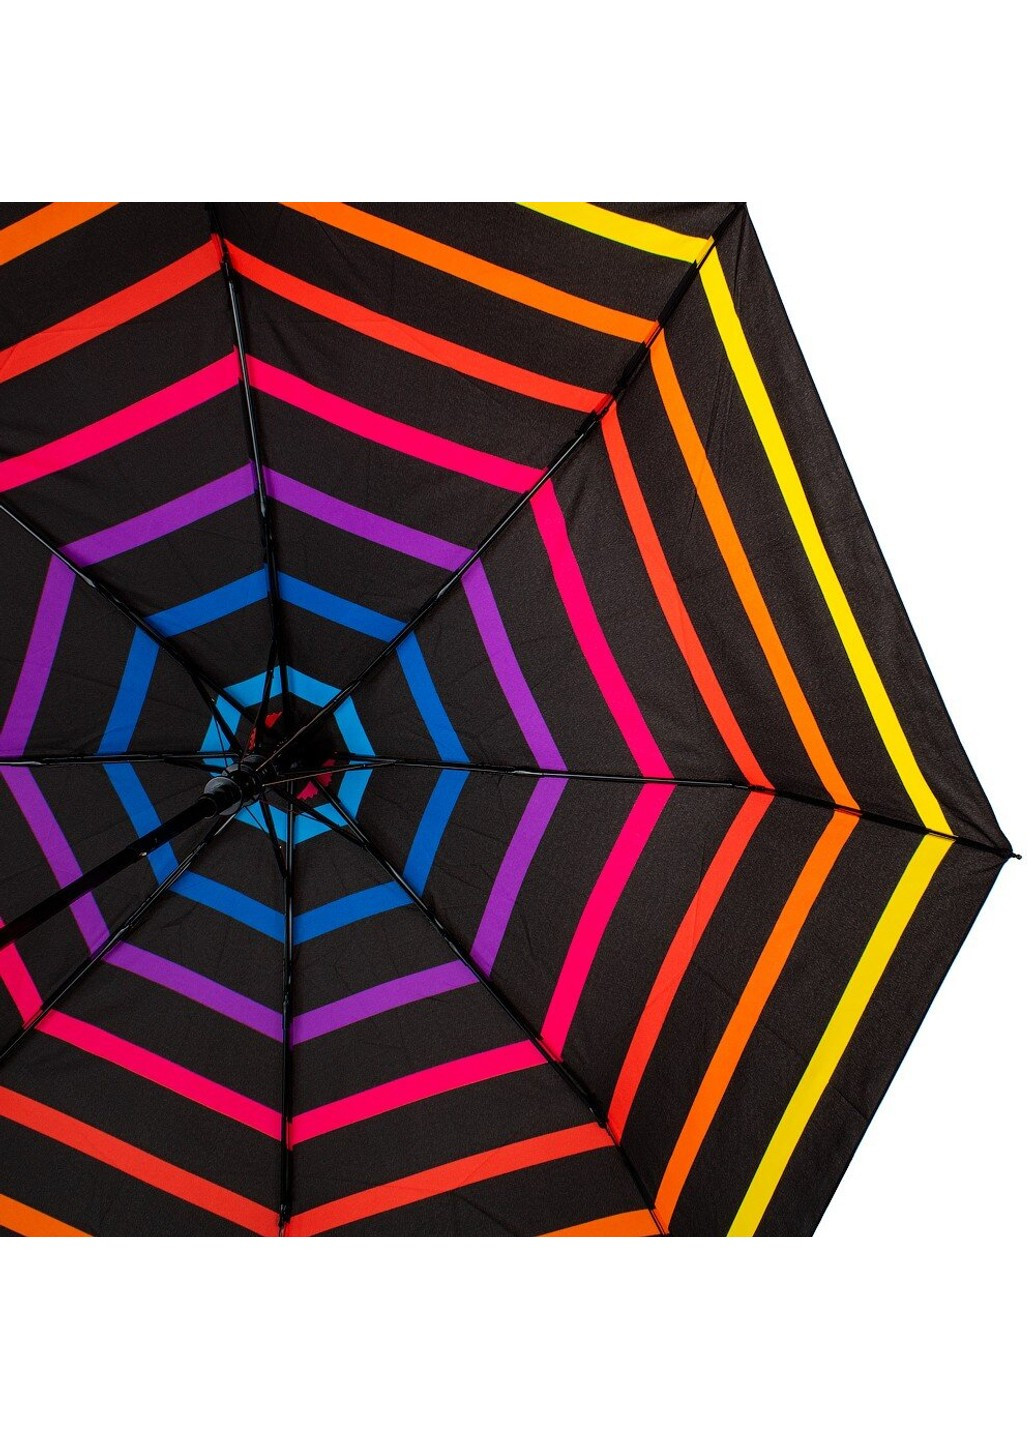 Жіноча парасолька напівавтомат u42272-8 Happy Rain (262982672)